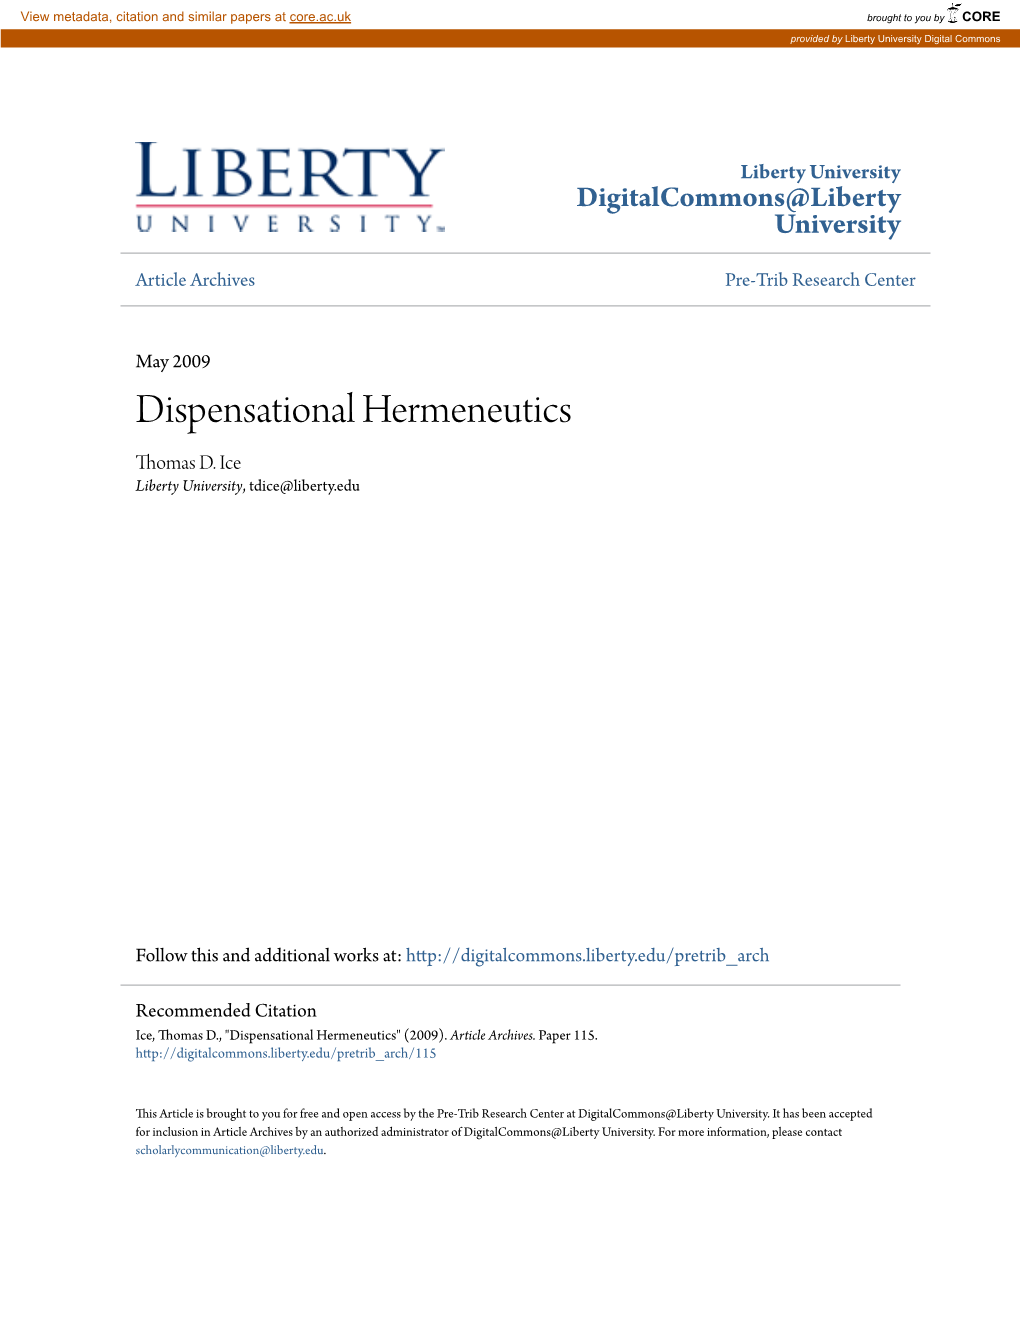 Dispensational Hermeneutics Thomas D